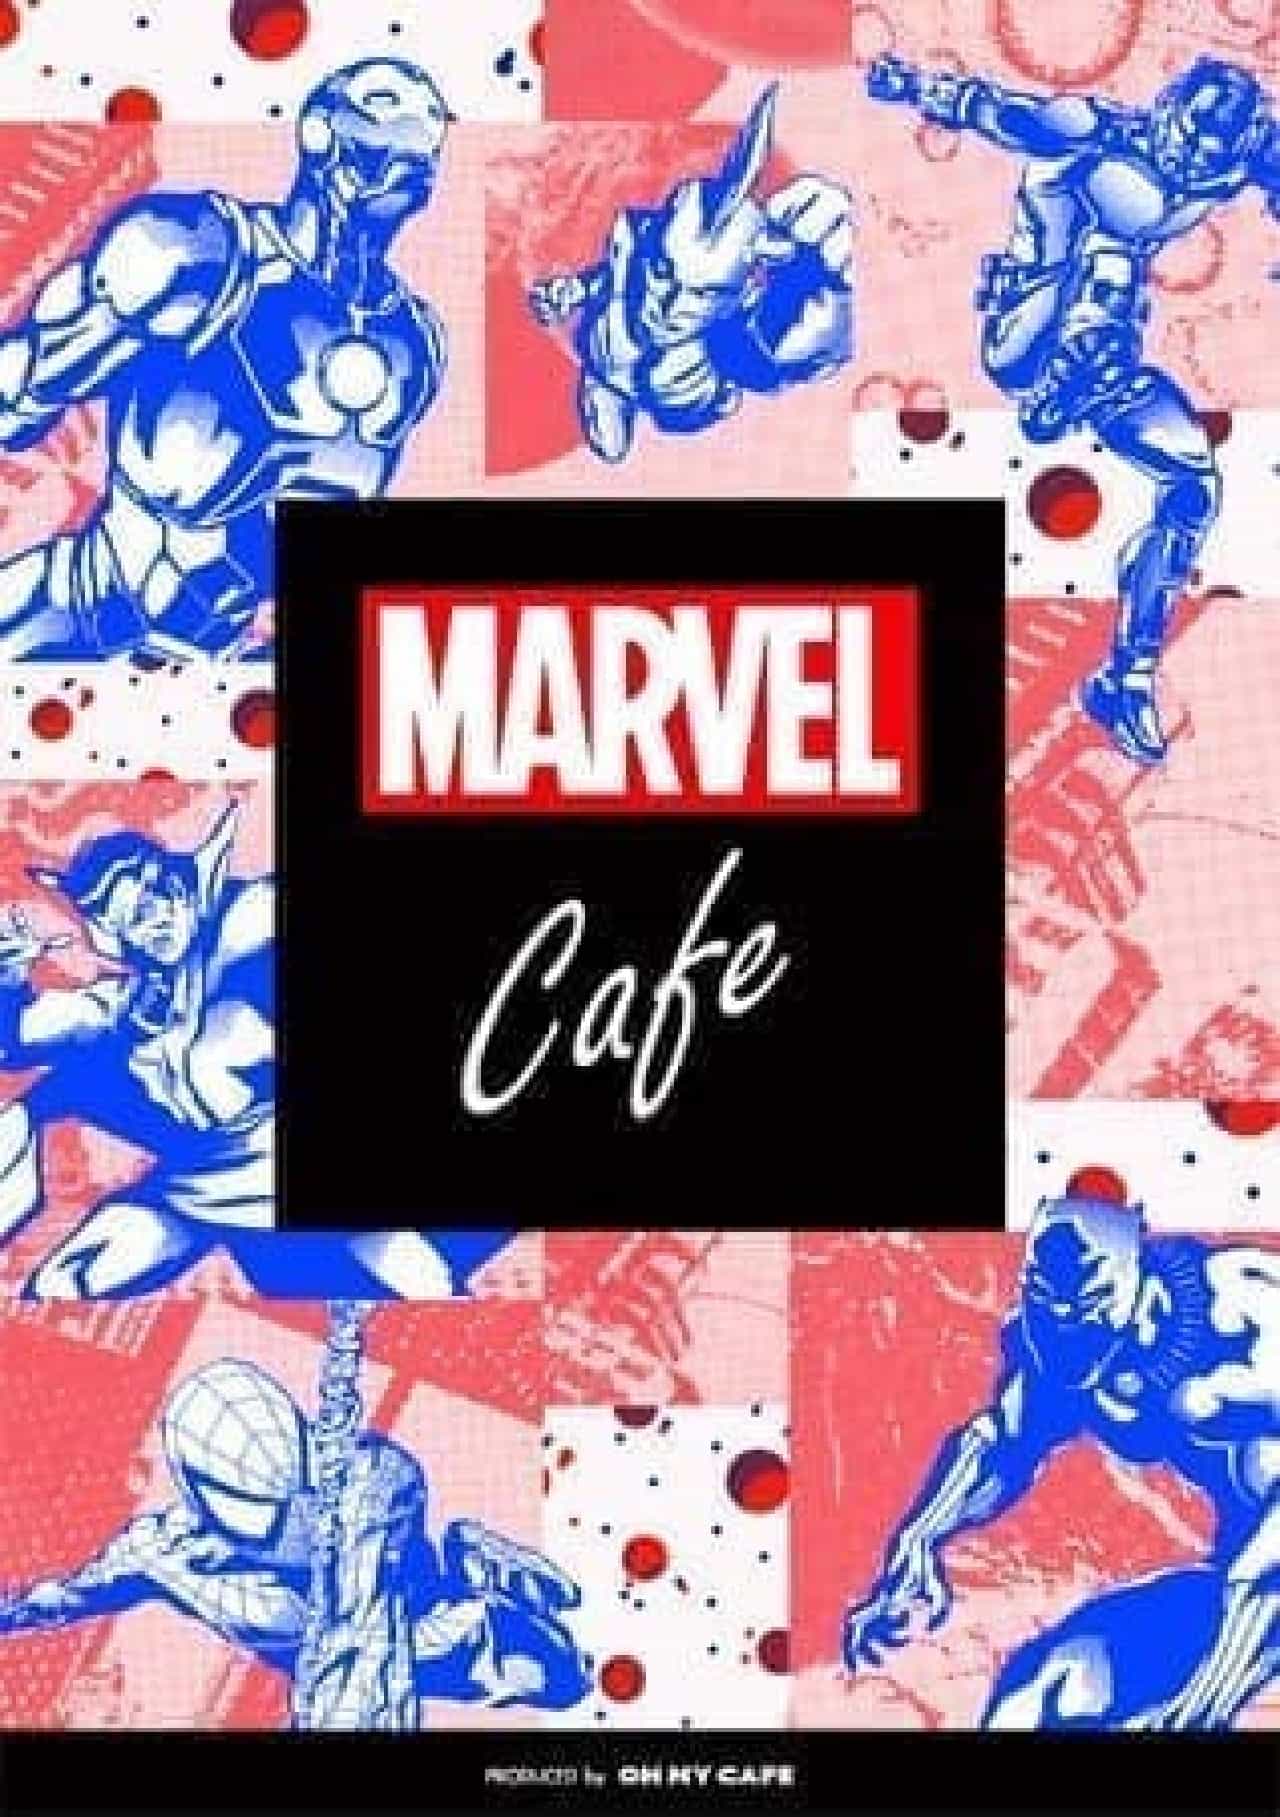 "MARVEL" cafe produced by OH MY CAFE